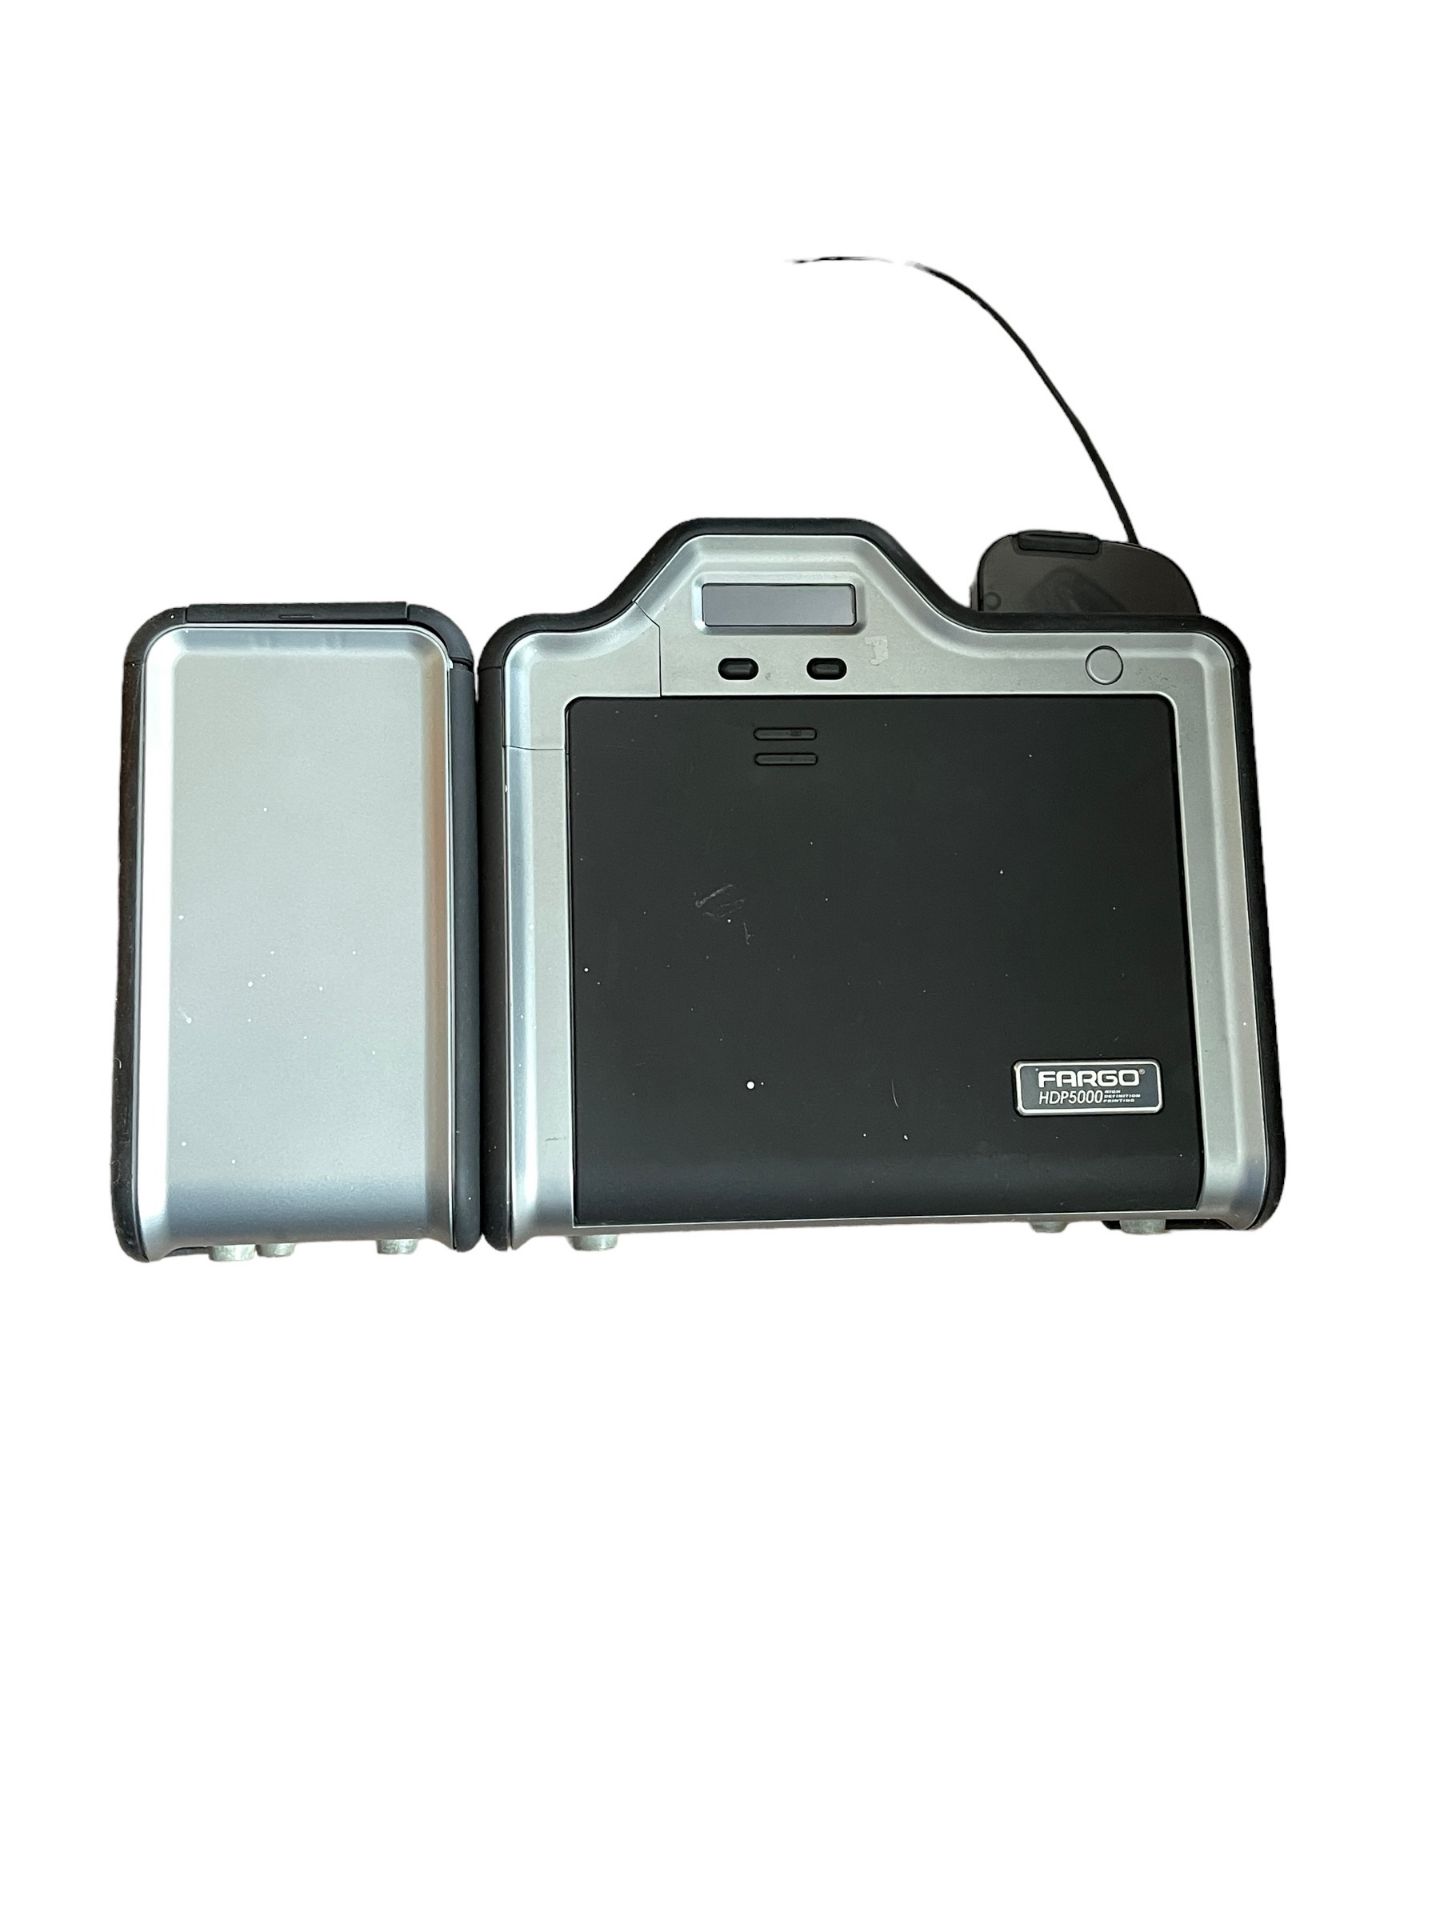 Fargo HPD 5000 ID card printer - Image 2 of 3